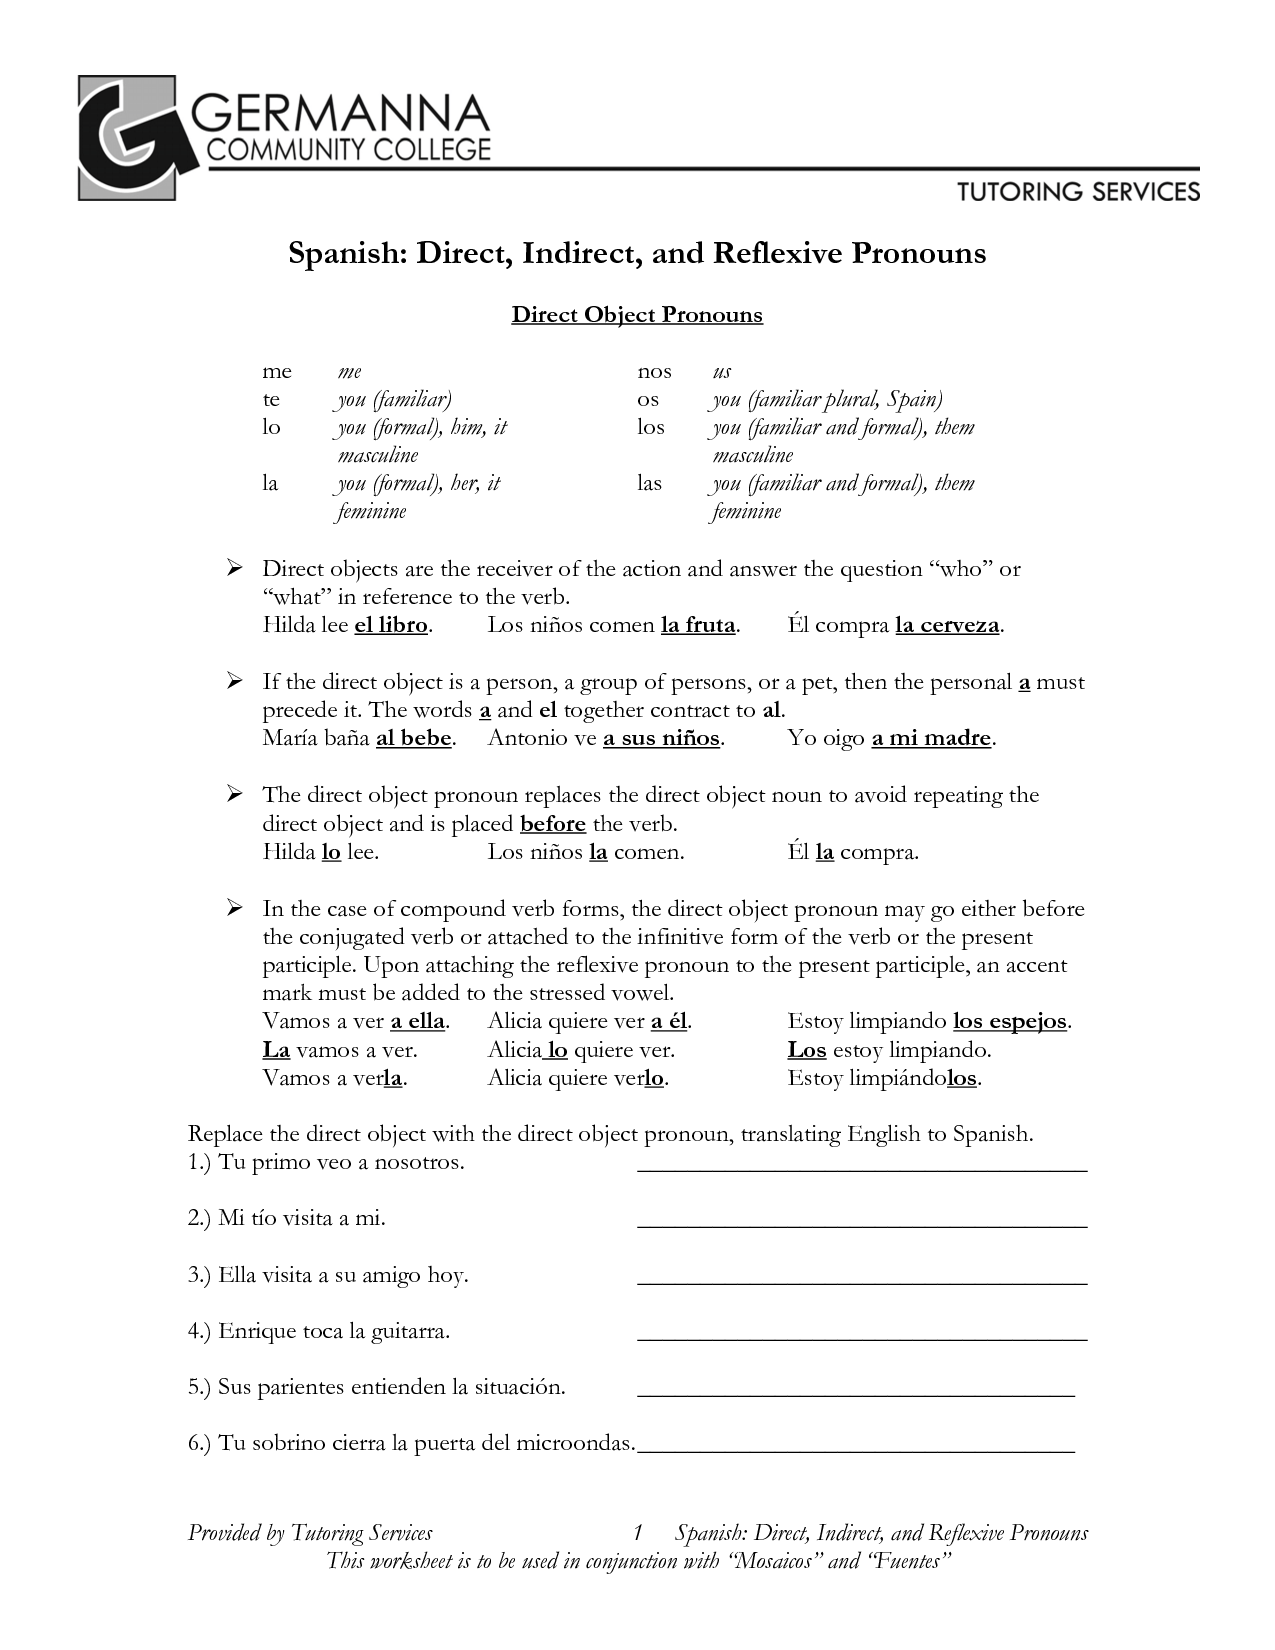 14 Best Images Of Spanish Pronouns Worksheet Subject Pronouns Worksheets Spanish Subject